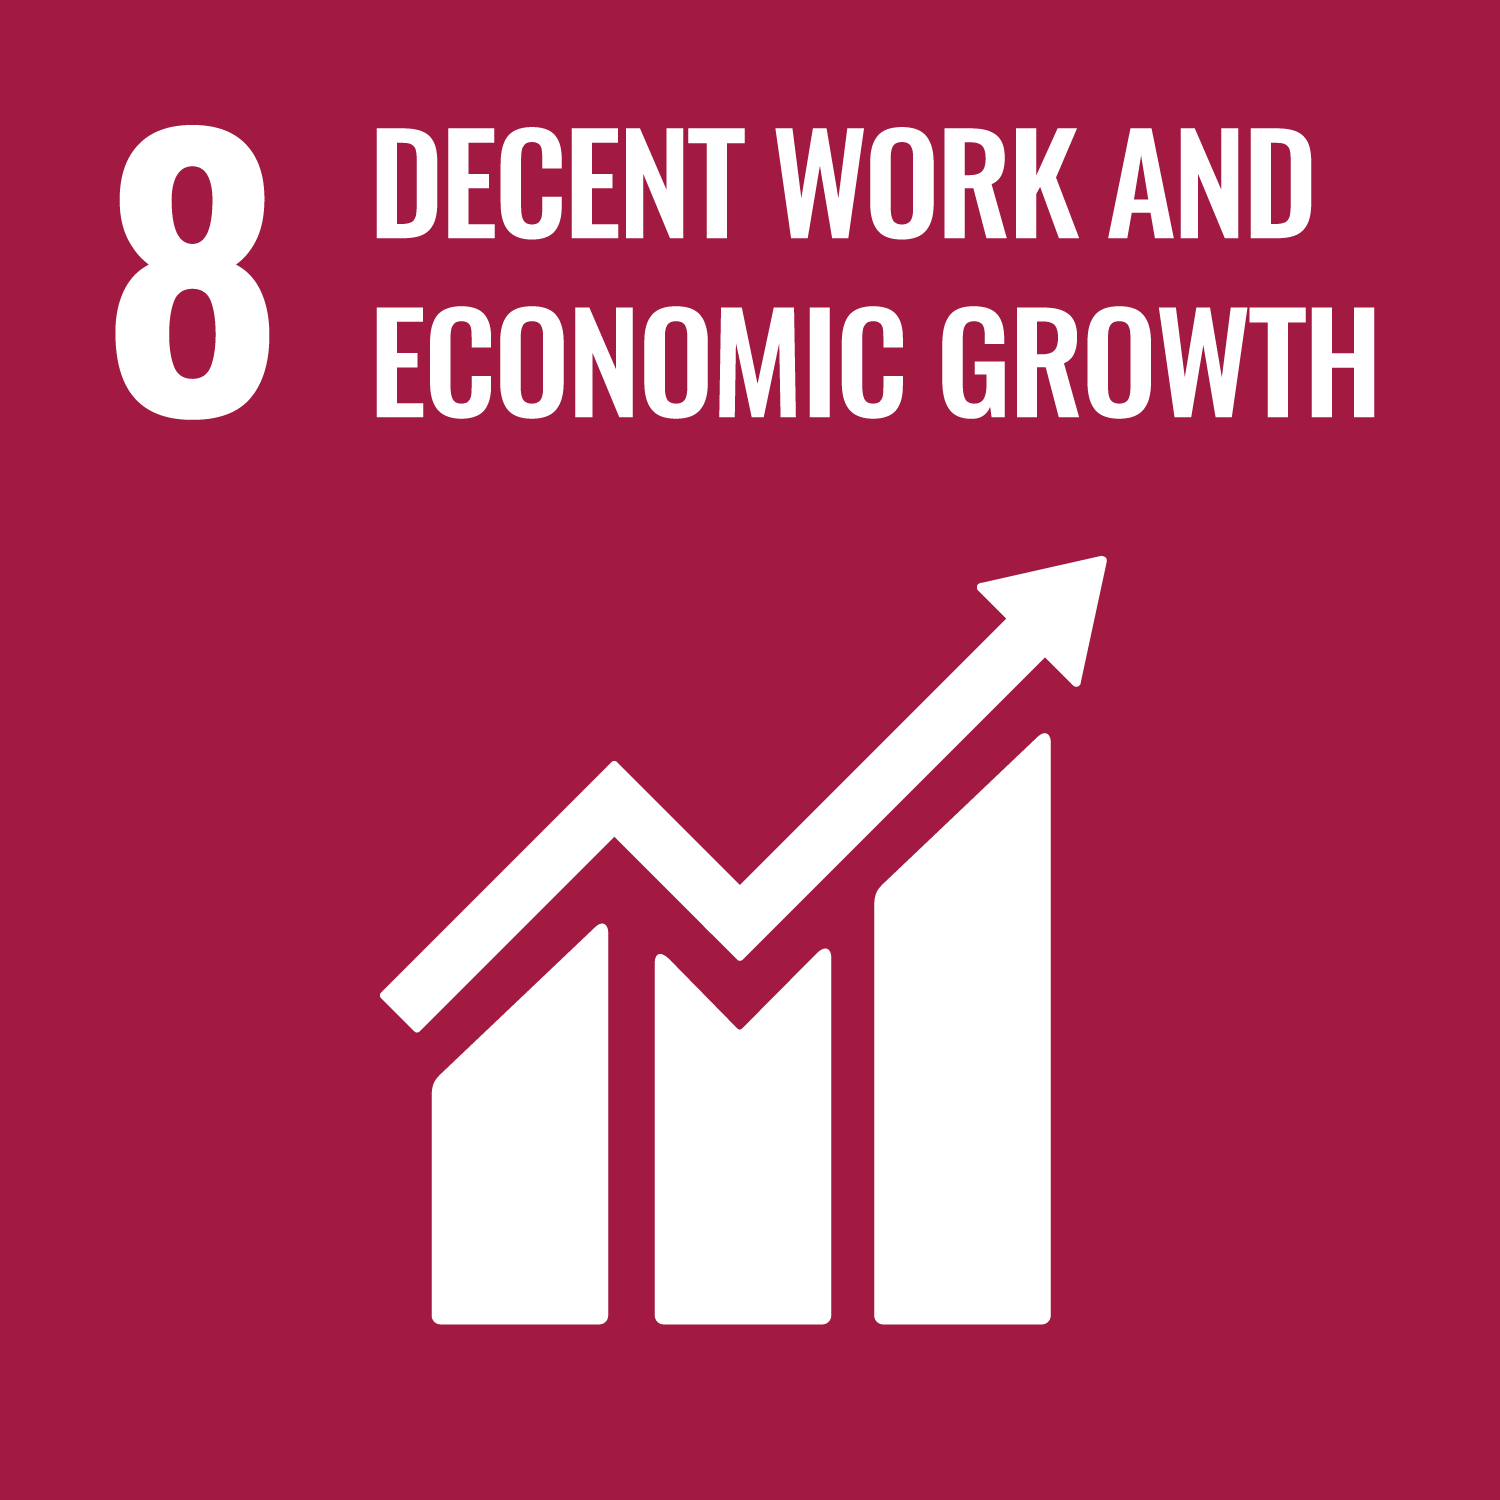 Sustainable Development Goal: SDG 8 "Decent Work and economic growth""